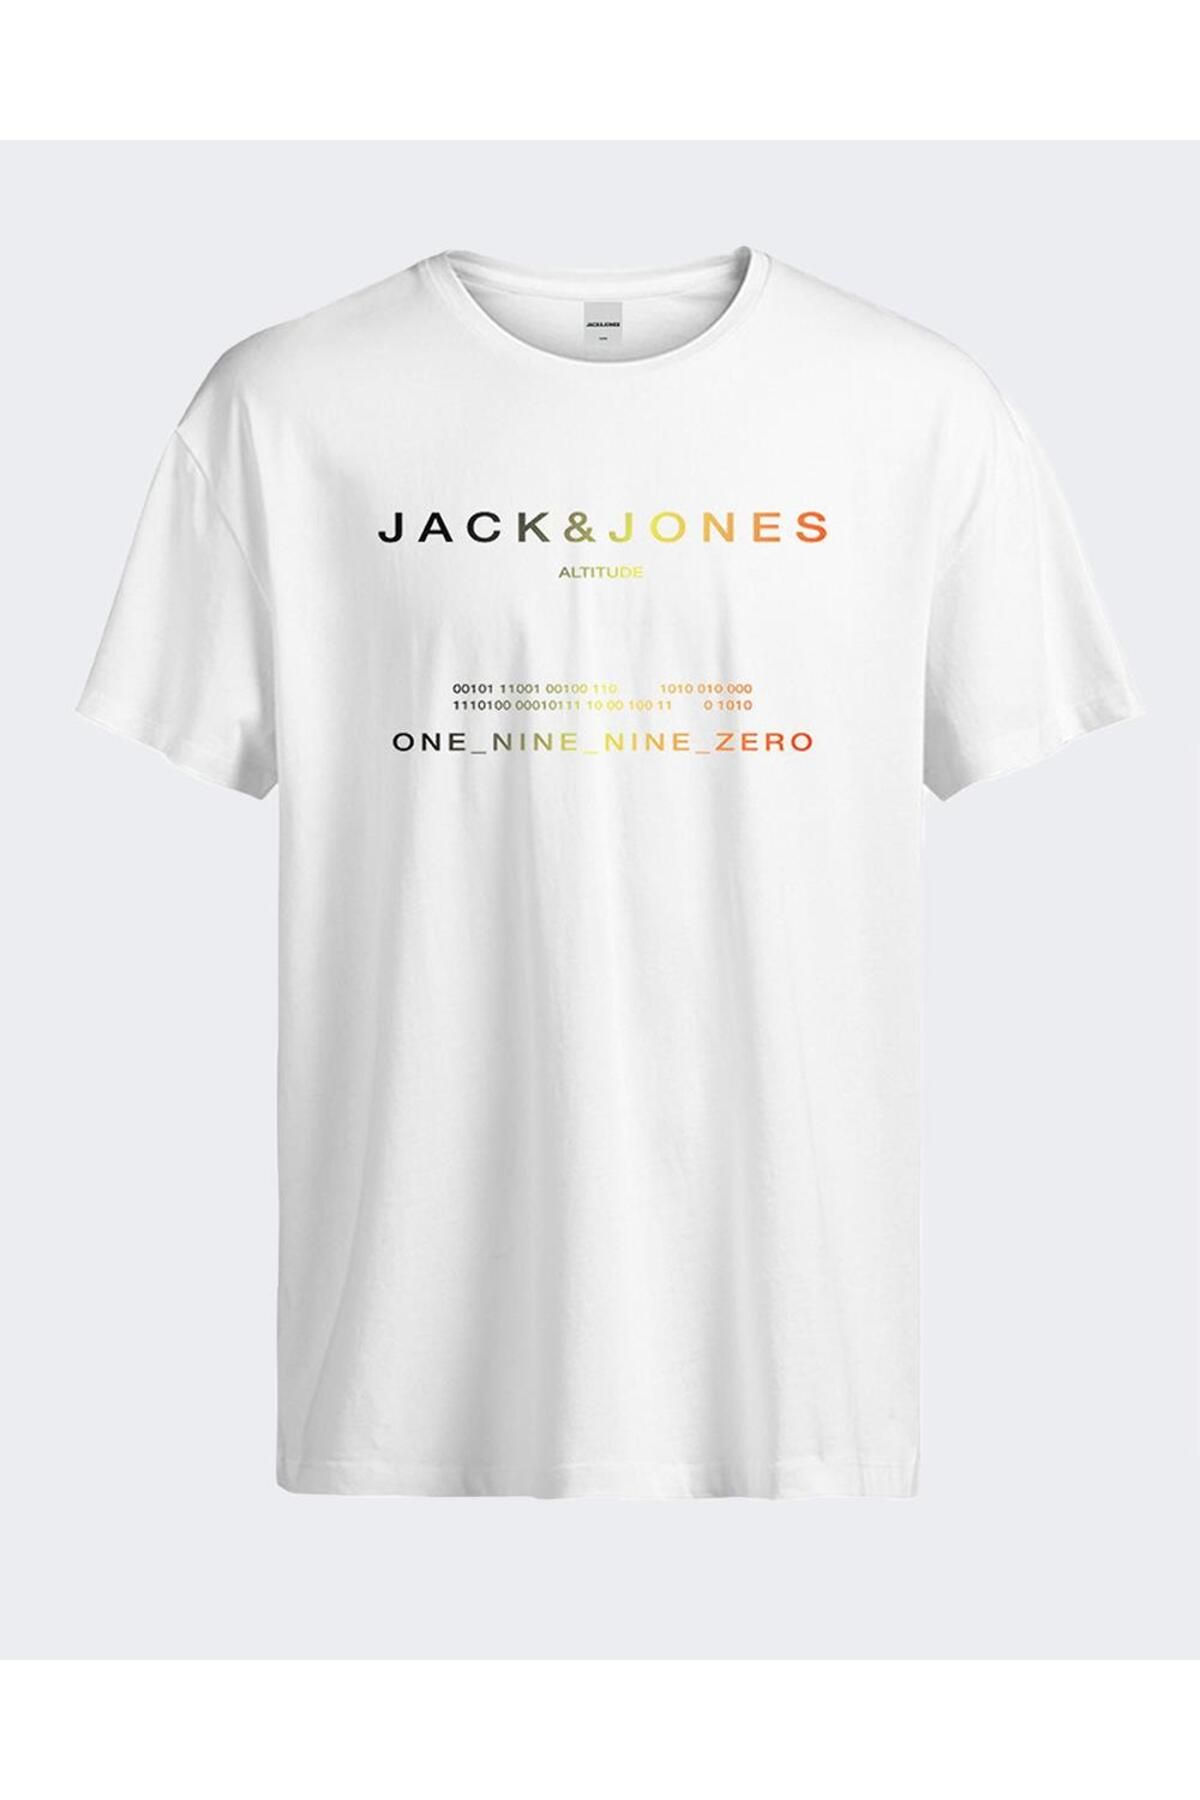 Jack & Jones Jcorıot Tee Ss Crew Neck Fst- White 12256771-wh